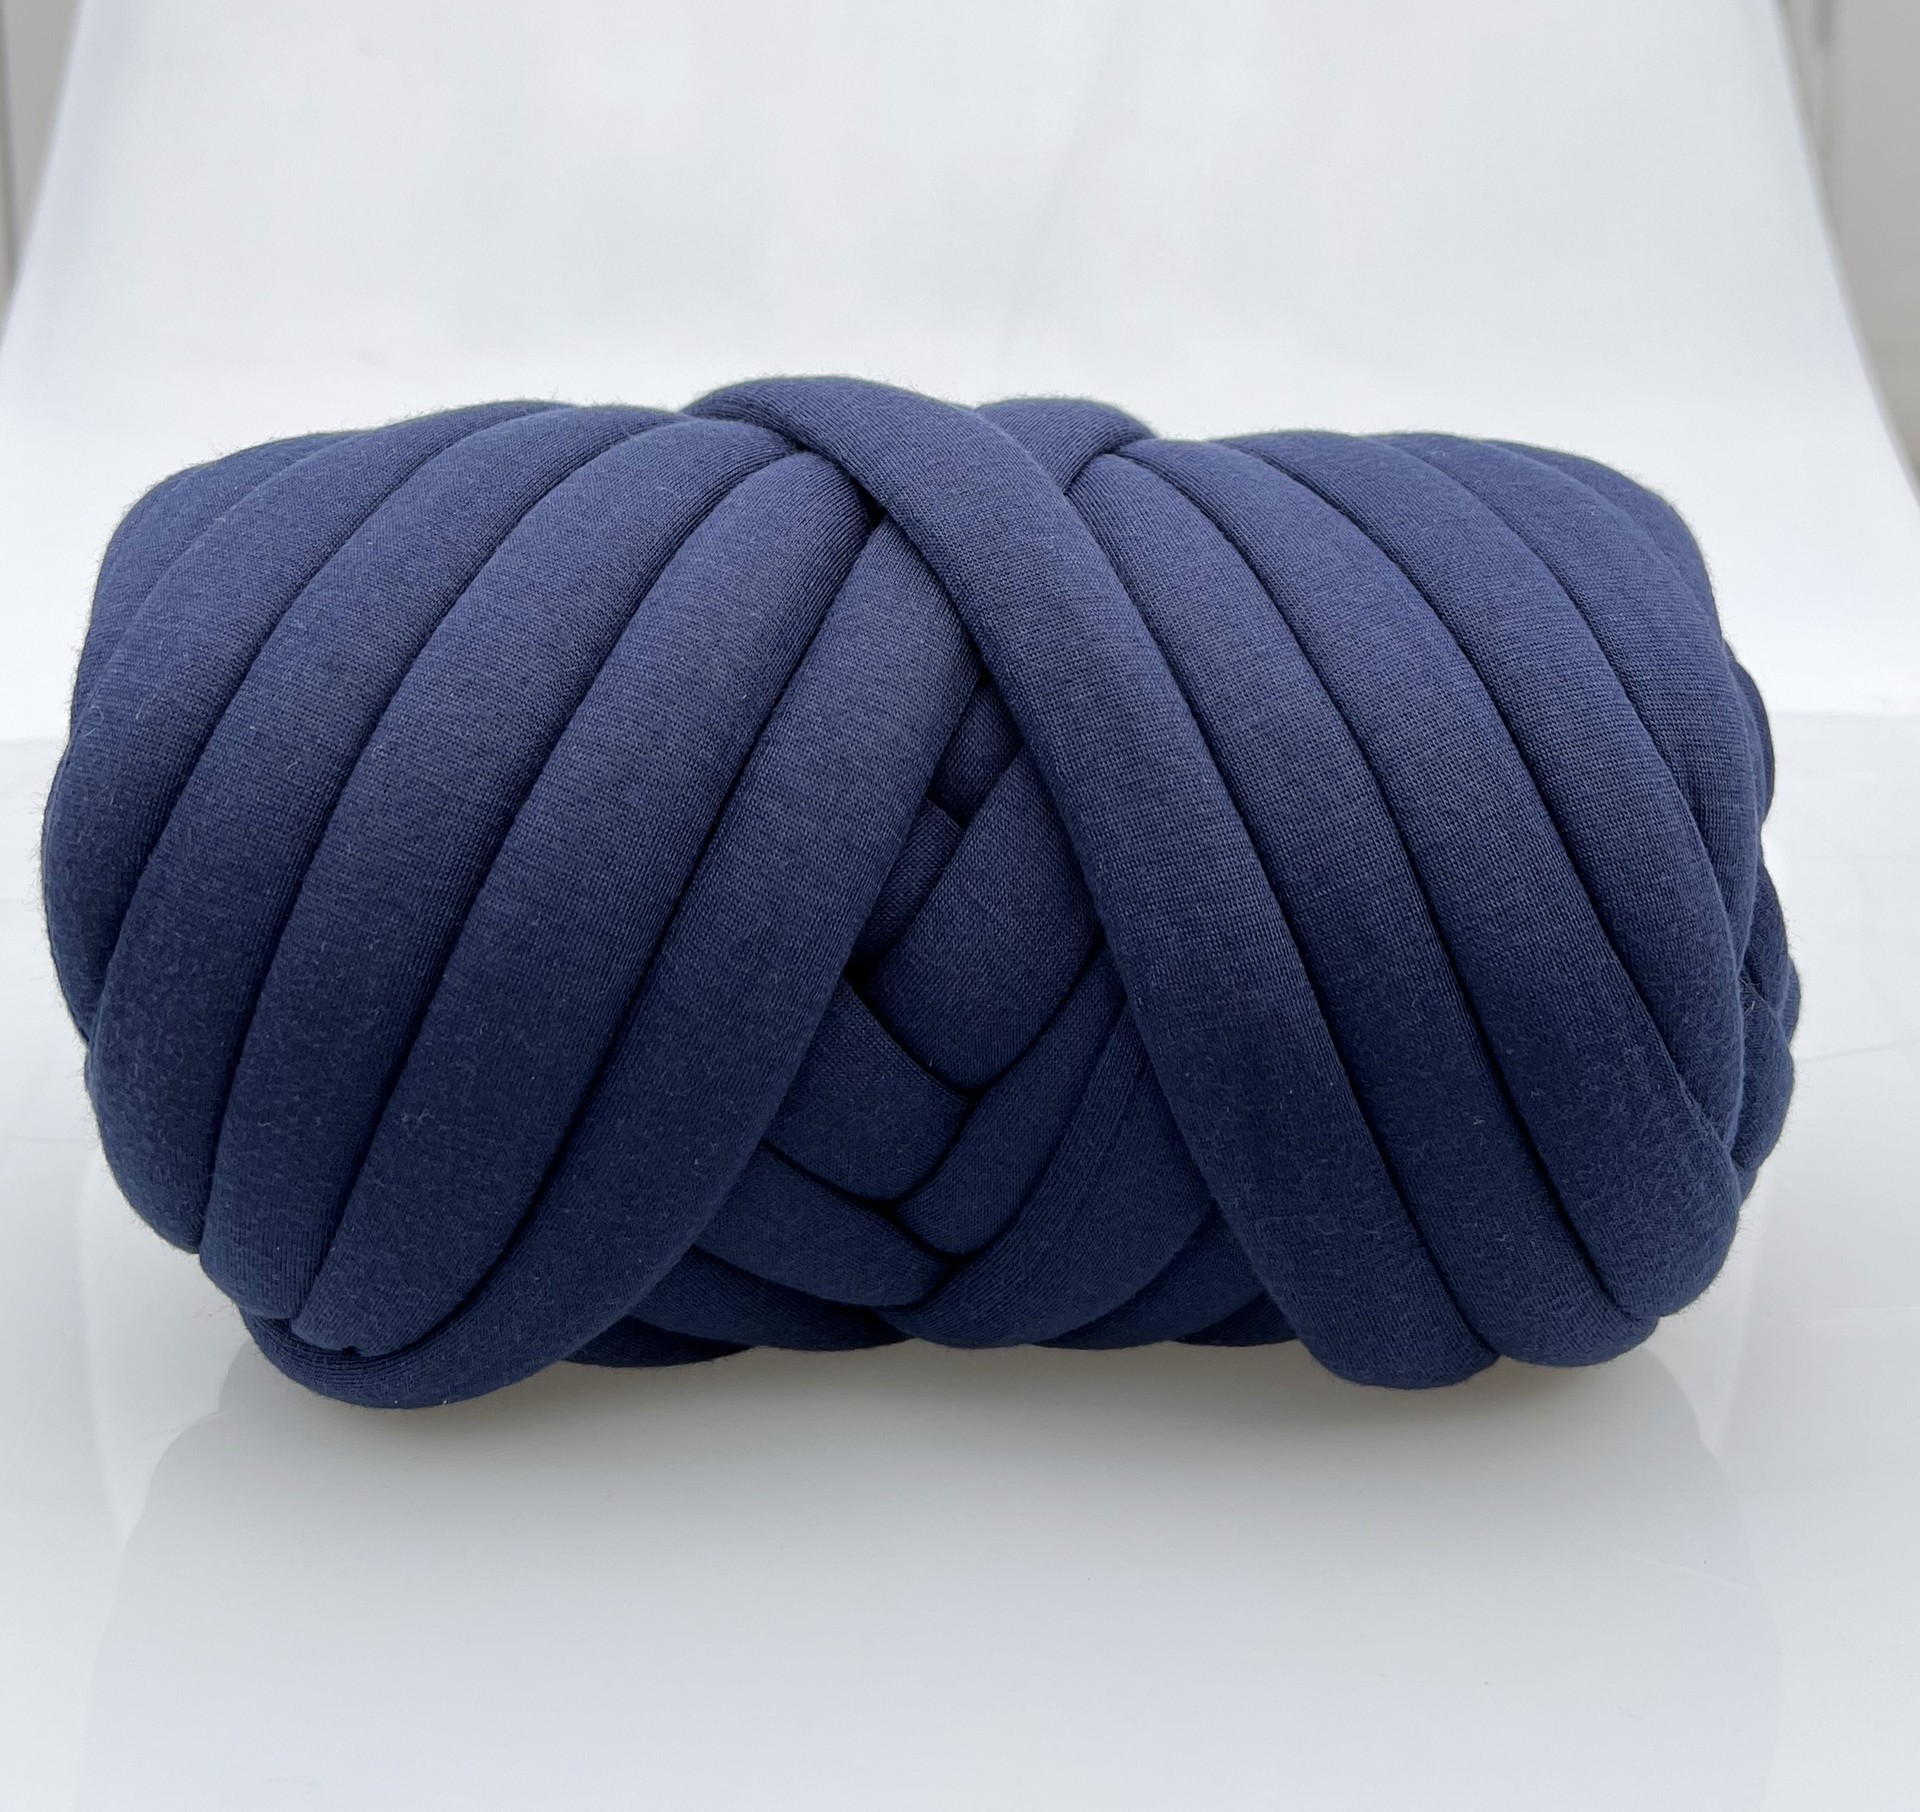 Giant Arm Knitting Chunky Yarn for Braided Knot Throw Blanket, Jumbo Chunky Yarn Twist Tubular Yarn Soft Extra Thick Yarn, Fluffy Bulky Weave Craft